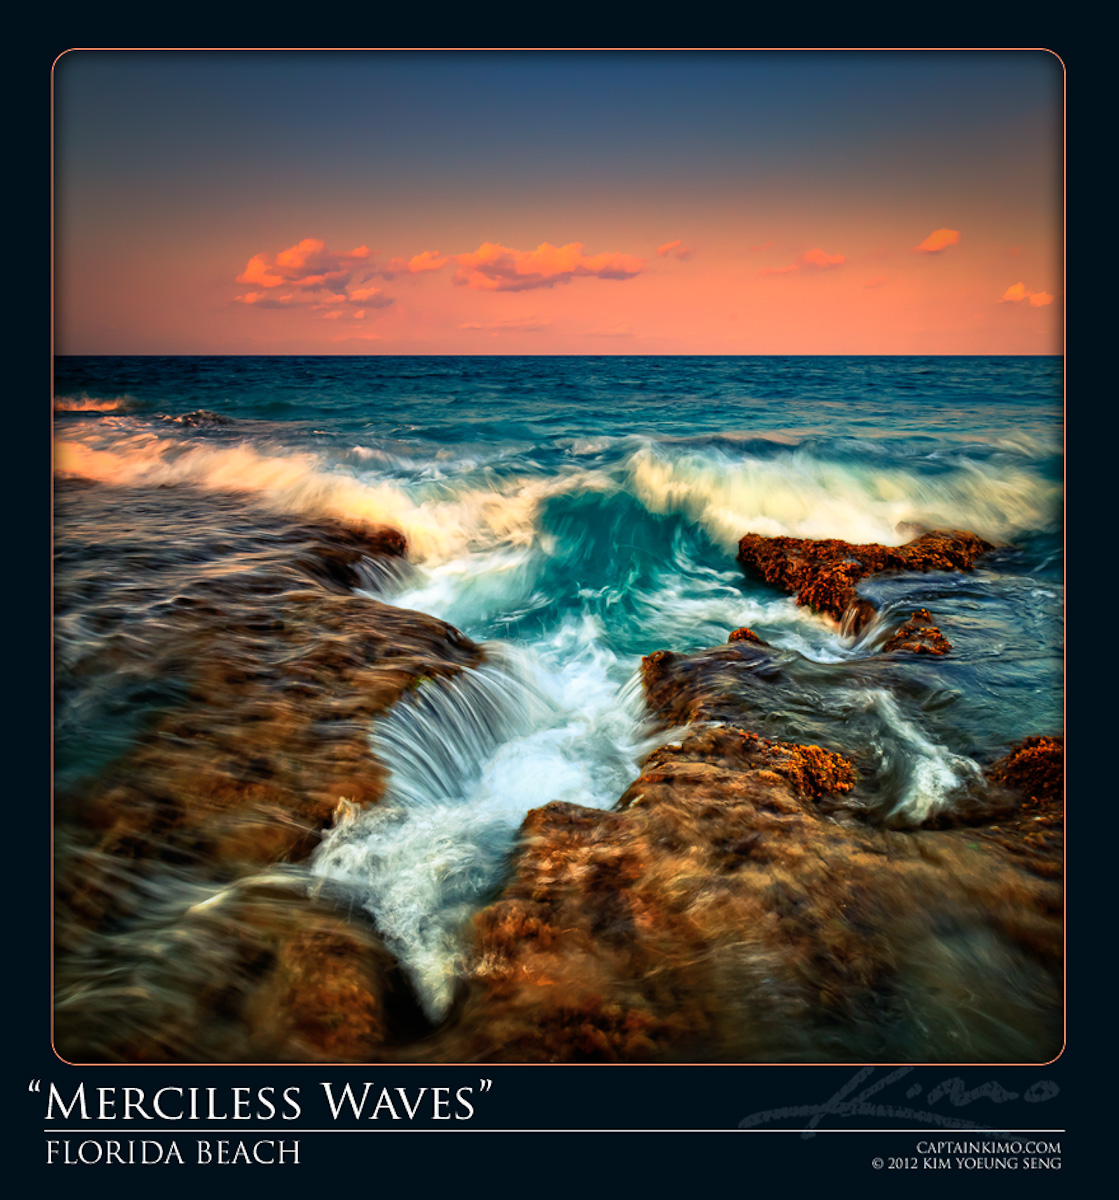 Merciless Waves from the Atlantic Ocean